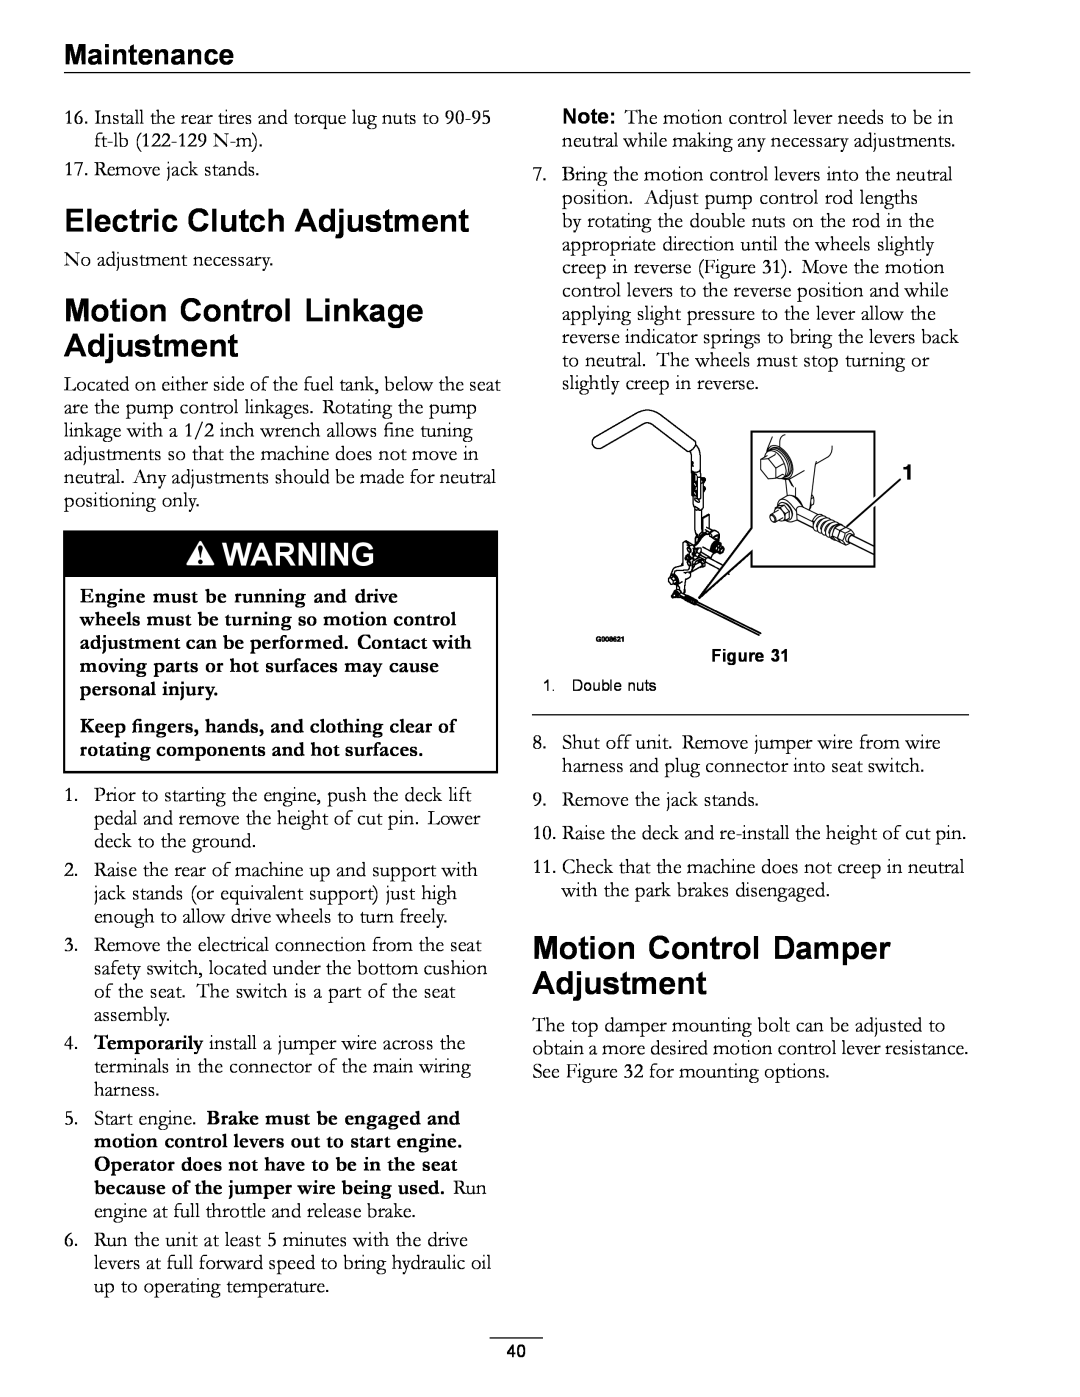 Exmark 4500-471, S/N 790 Electric Clutch Adjustment, Motion Control Linkage Adjustment, Motion Control Damper Adjustment 